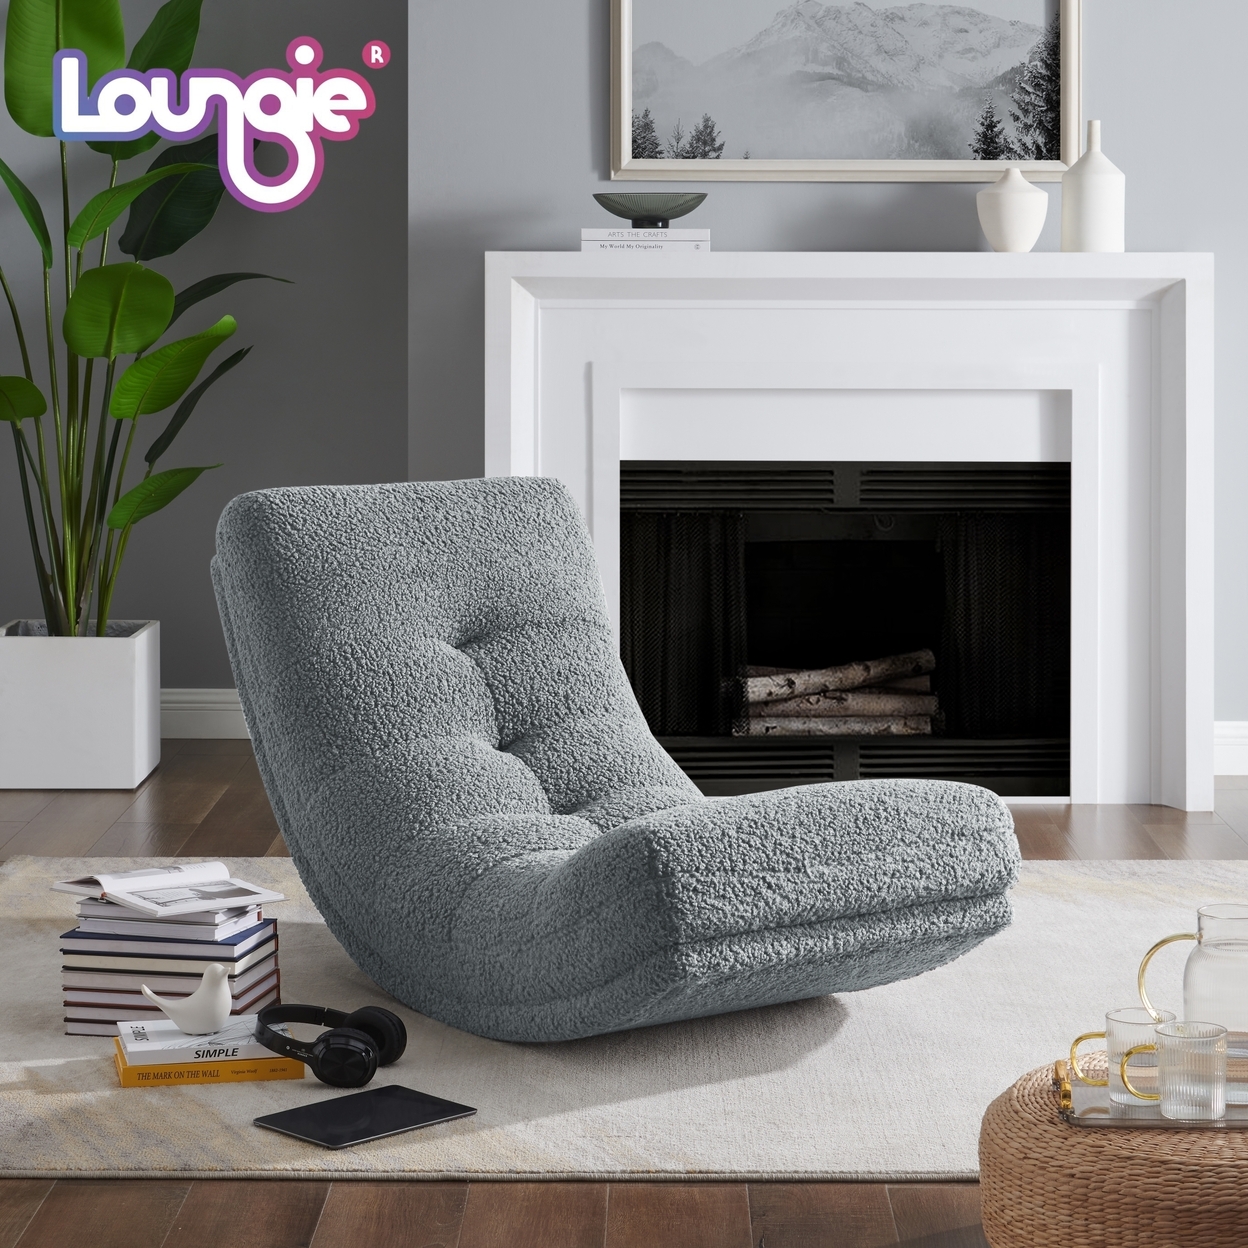 Kaniya Chair - Sherpa Upholstery, Tufted, Gentle Rocking Design, Ergonomic Shape And Padded Seat - Ivory